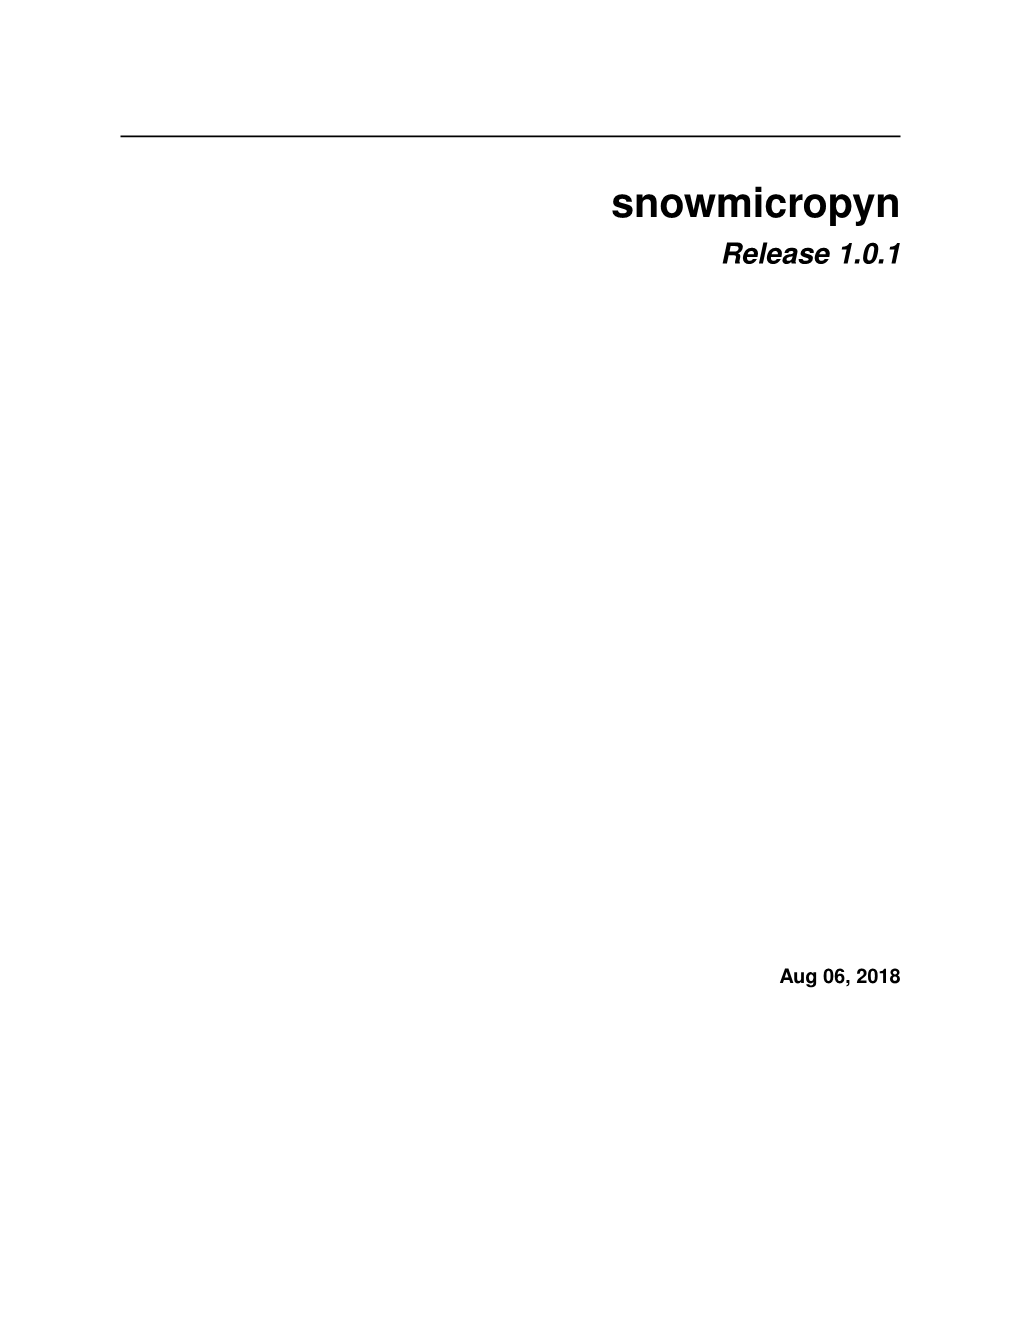 Snowmicropyn's Documentation